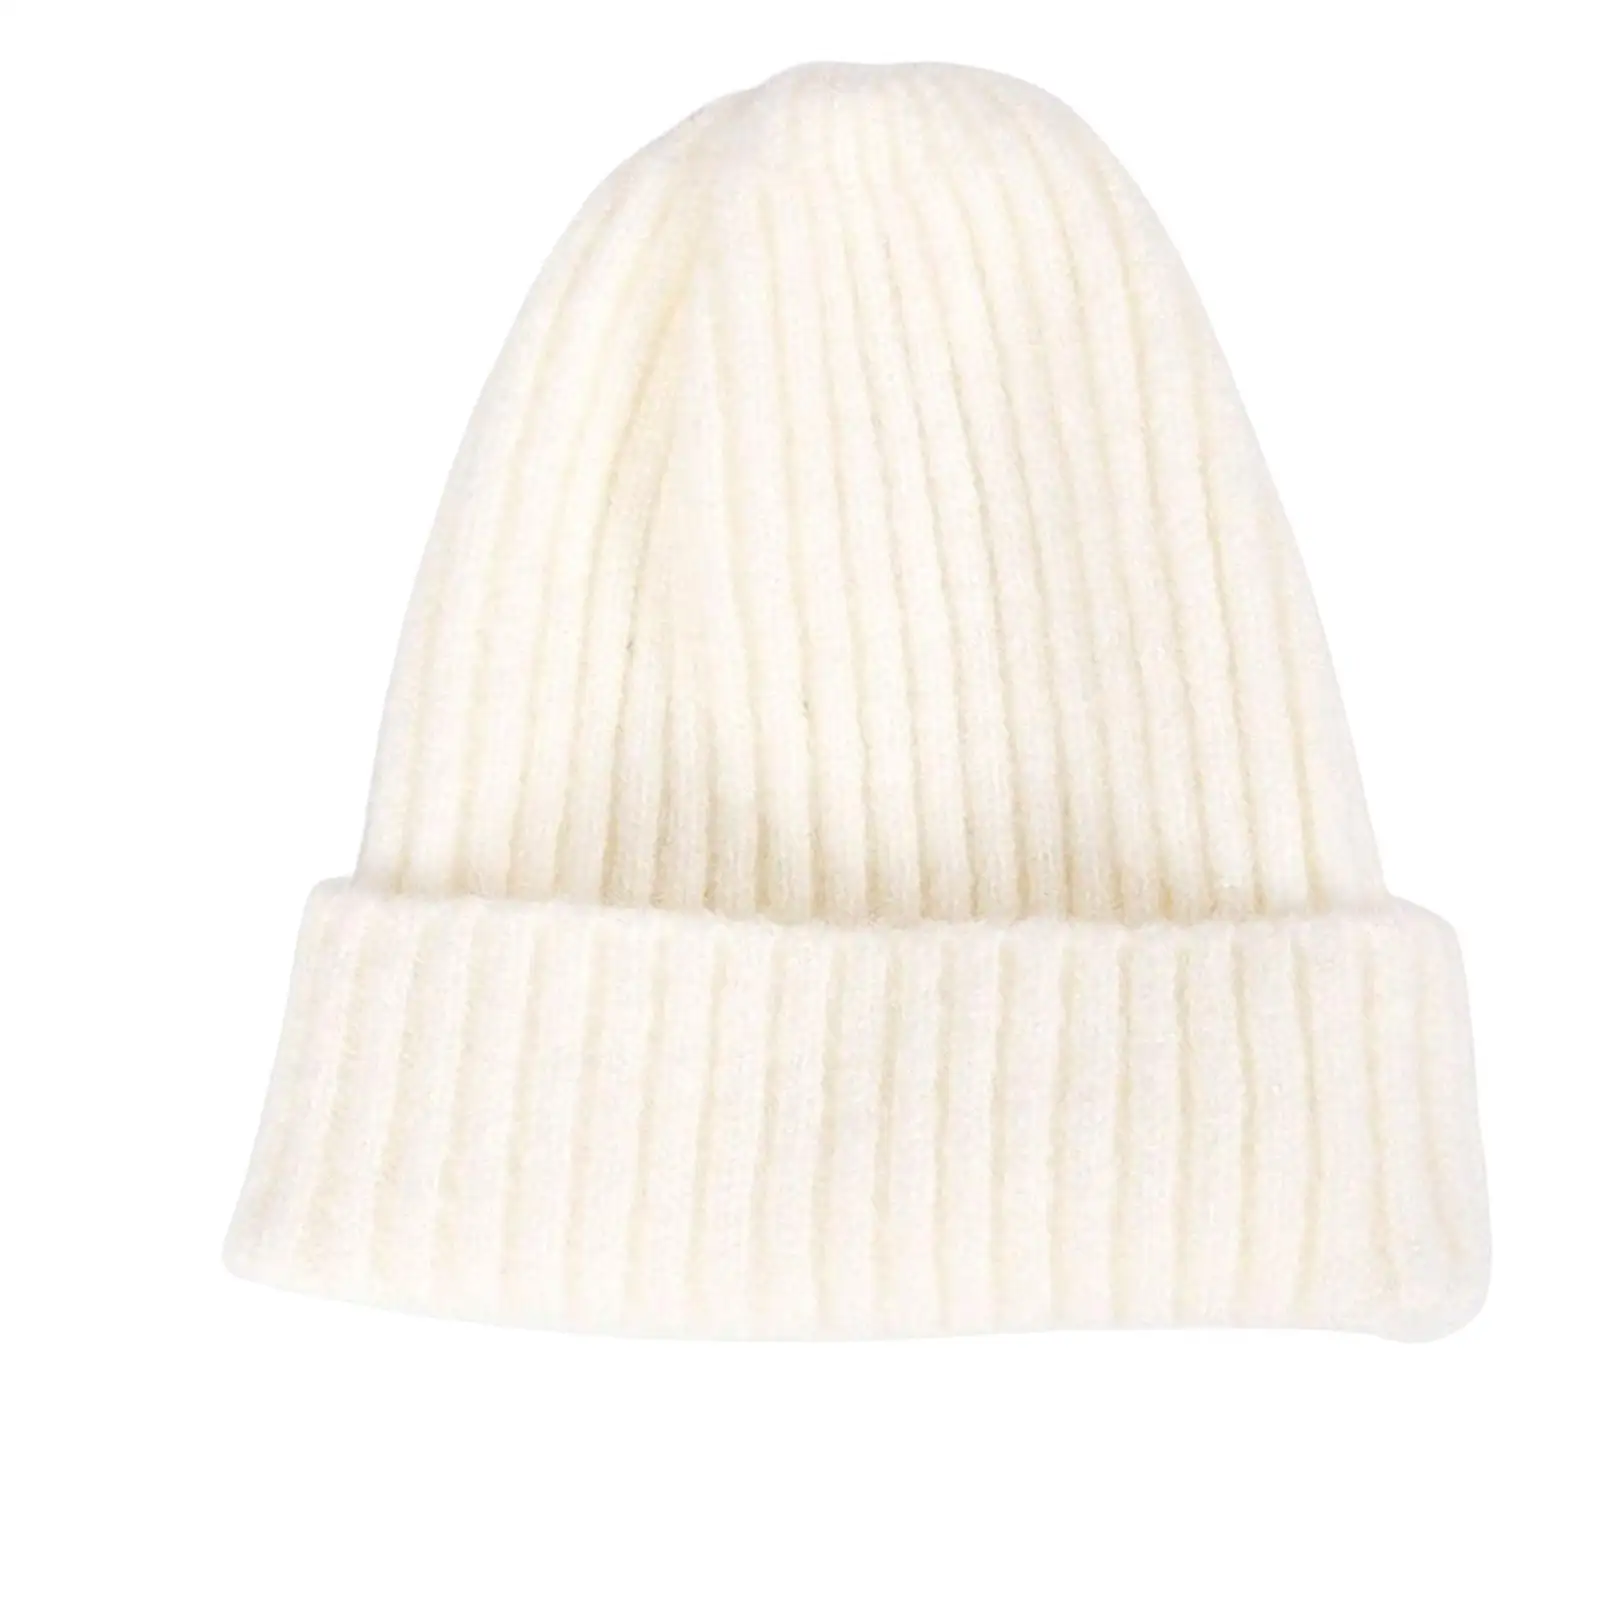 Knitted Cuffed hat Fisherman Beanie Slouchy One Size Warm Lightweight Skull Cap for Men women Winter